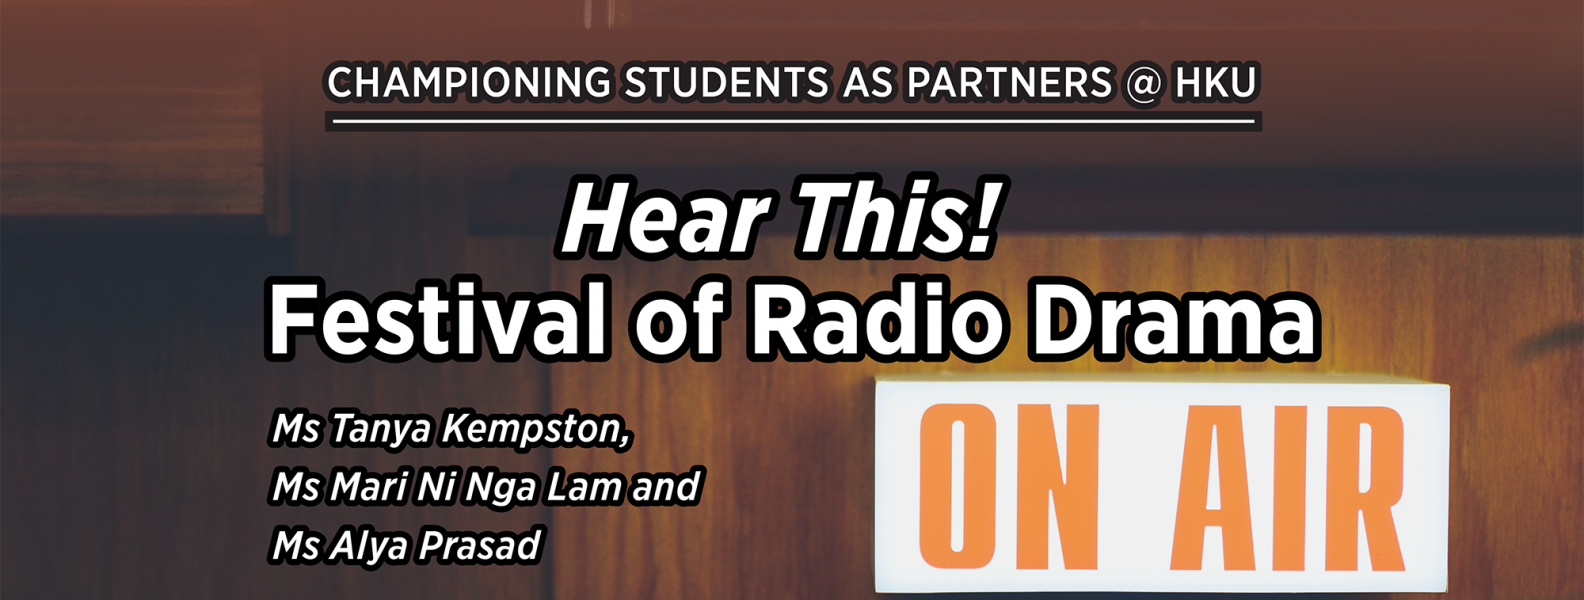 Hear This! Festival of Radio Drama